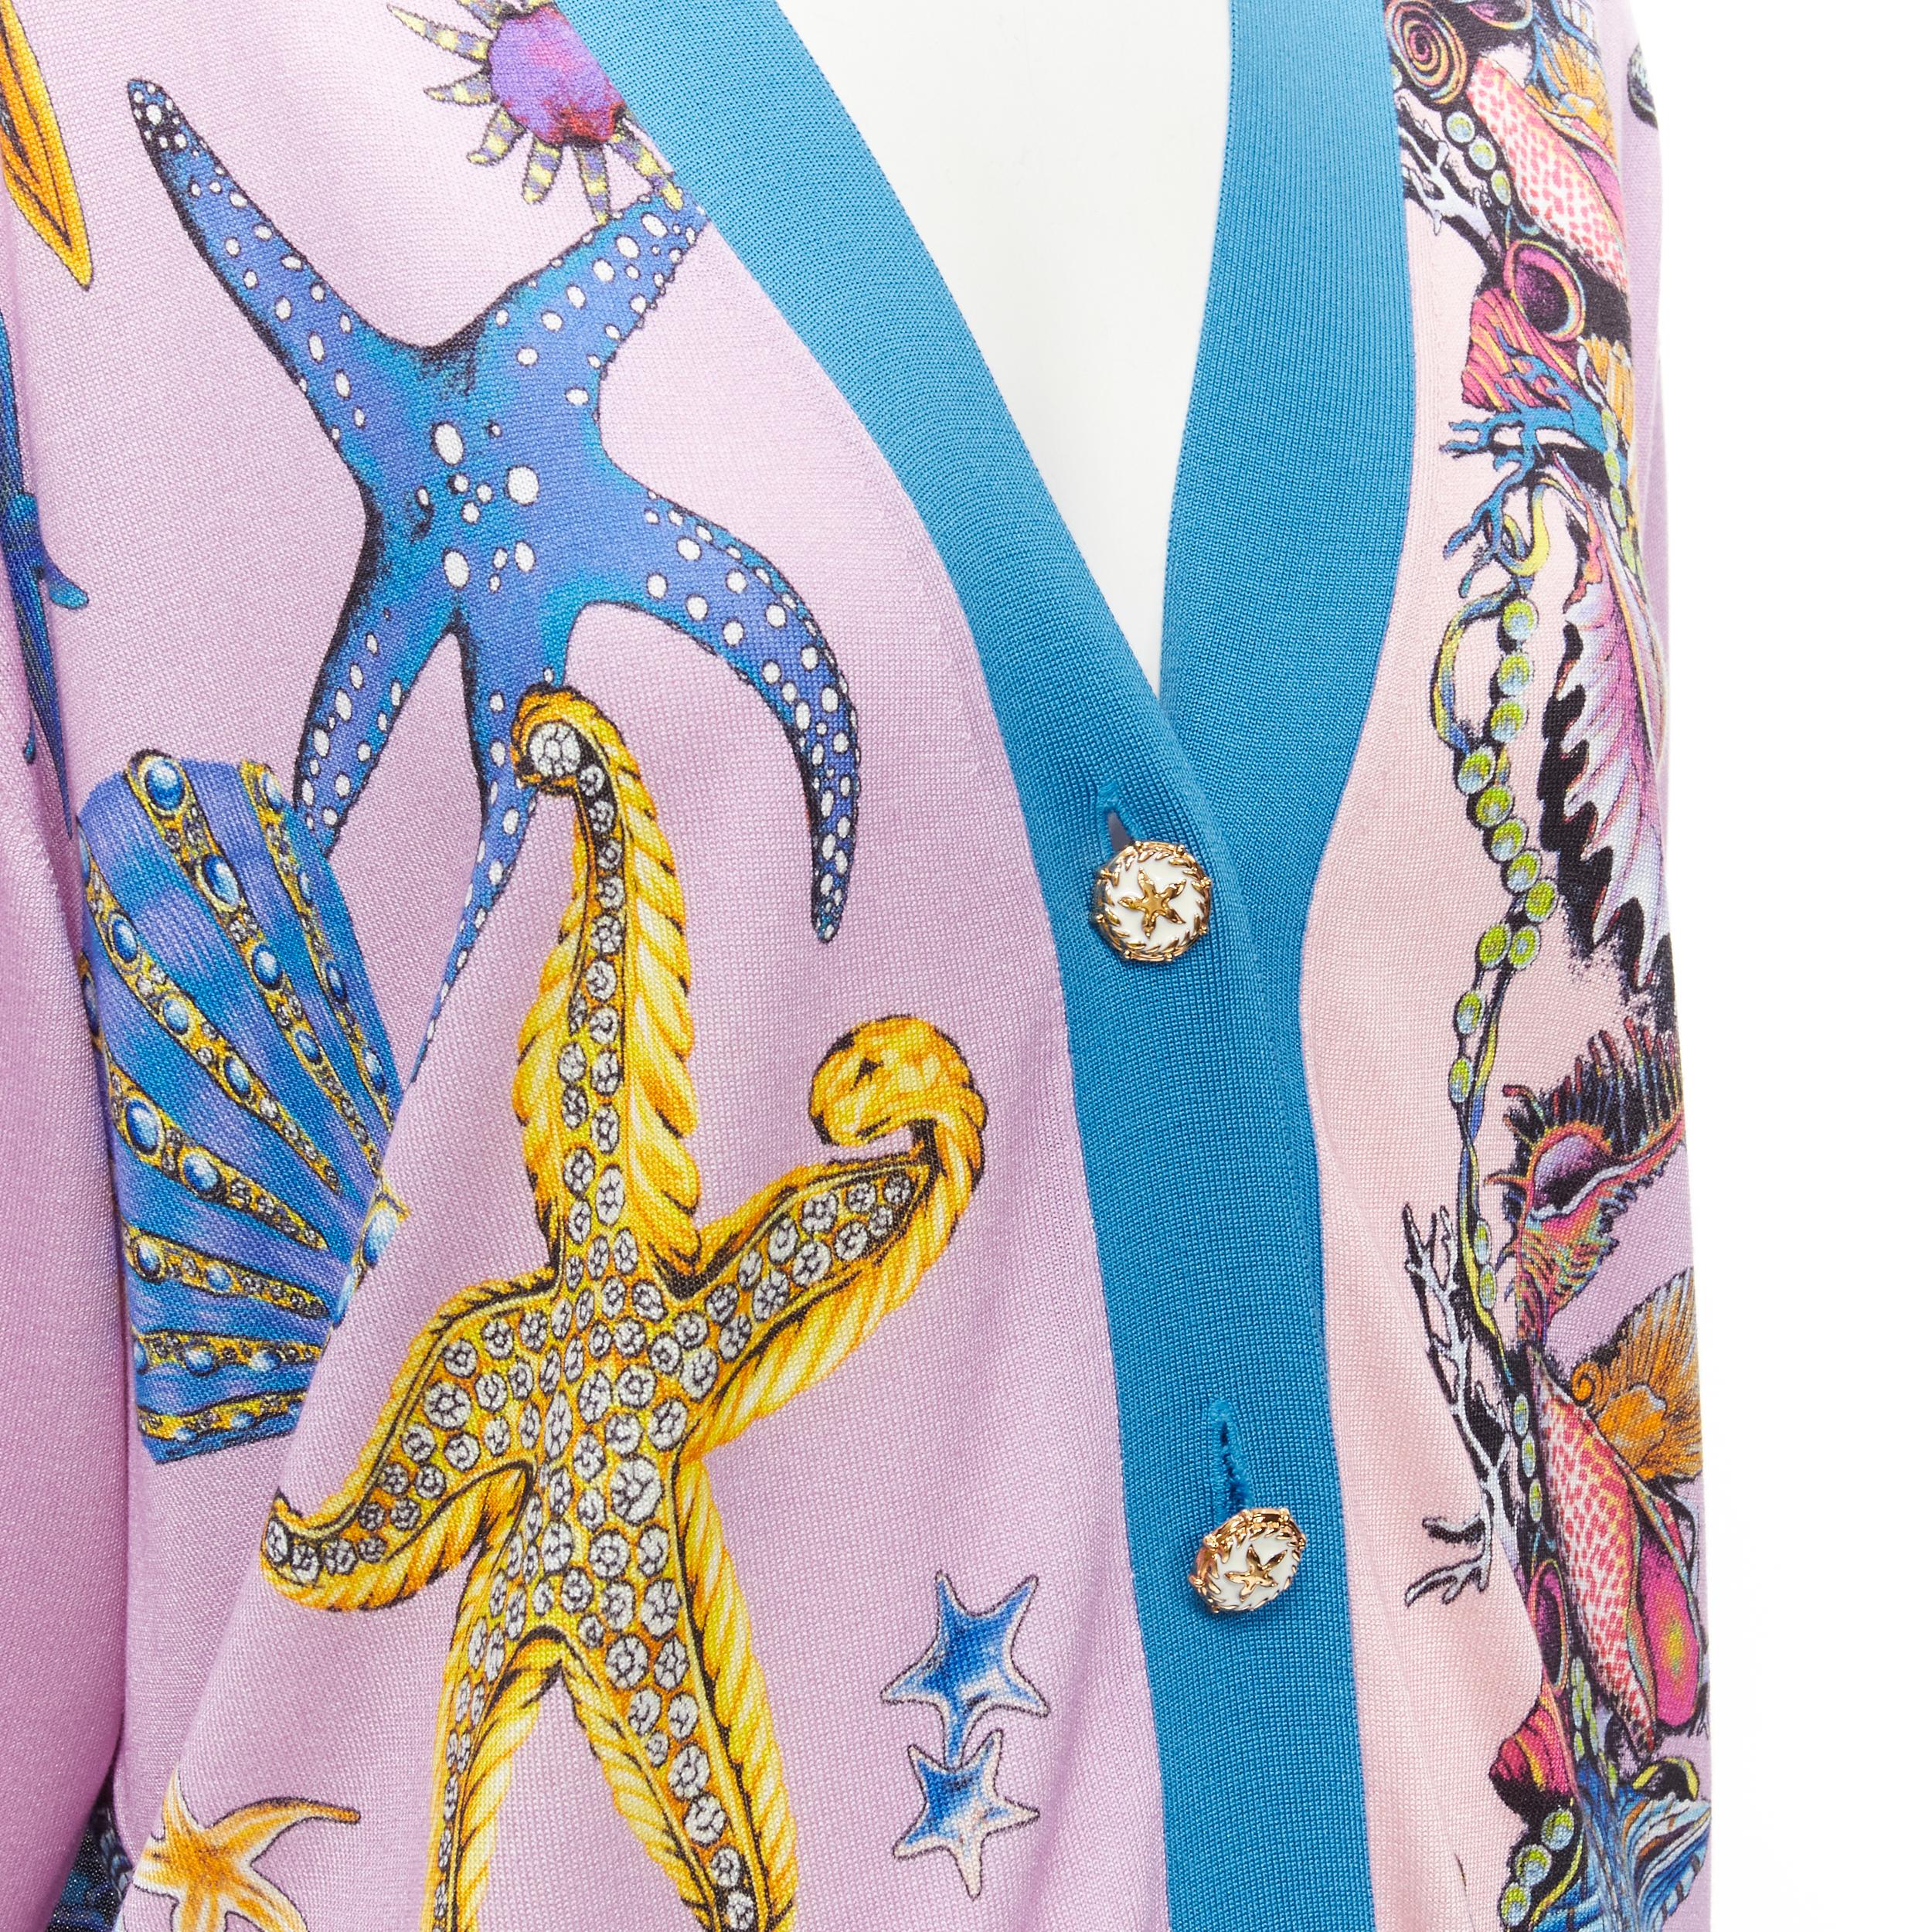 new VERSACE 2021 Tresor De La Mer pink starfish knit cardigan top IT40 S
Reference: TGAS/C01813
Brand: Versace
Designer: Donatella Versace
Model: A89295 A237537 5V010
Collection: 2021 Tresor De La Mer
Material: Silk
Color: Pink, Purple
Pattern: